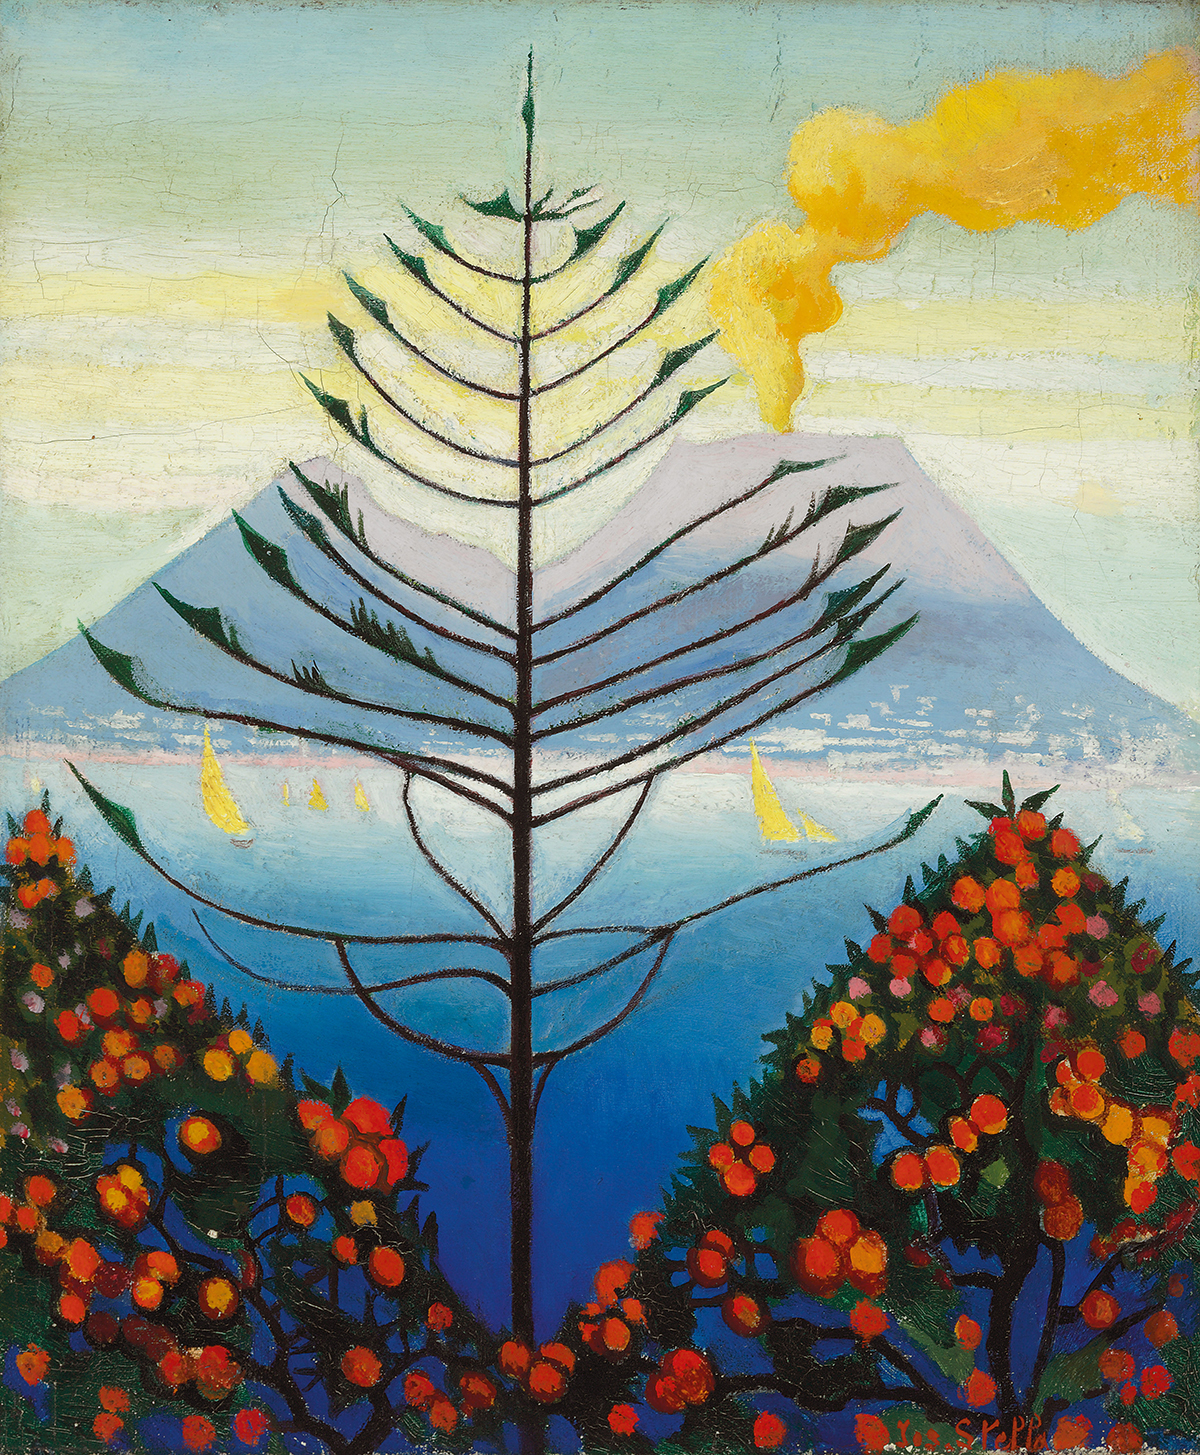 कैप्री by Joseph Stella - c. 1926–1929 - 43.8 x 35.6 cm 